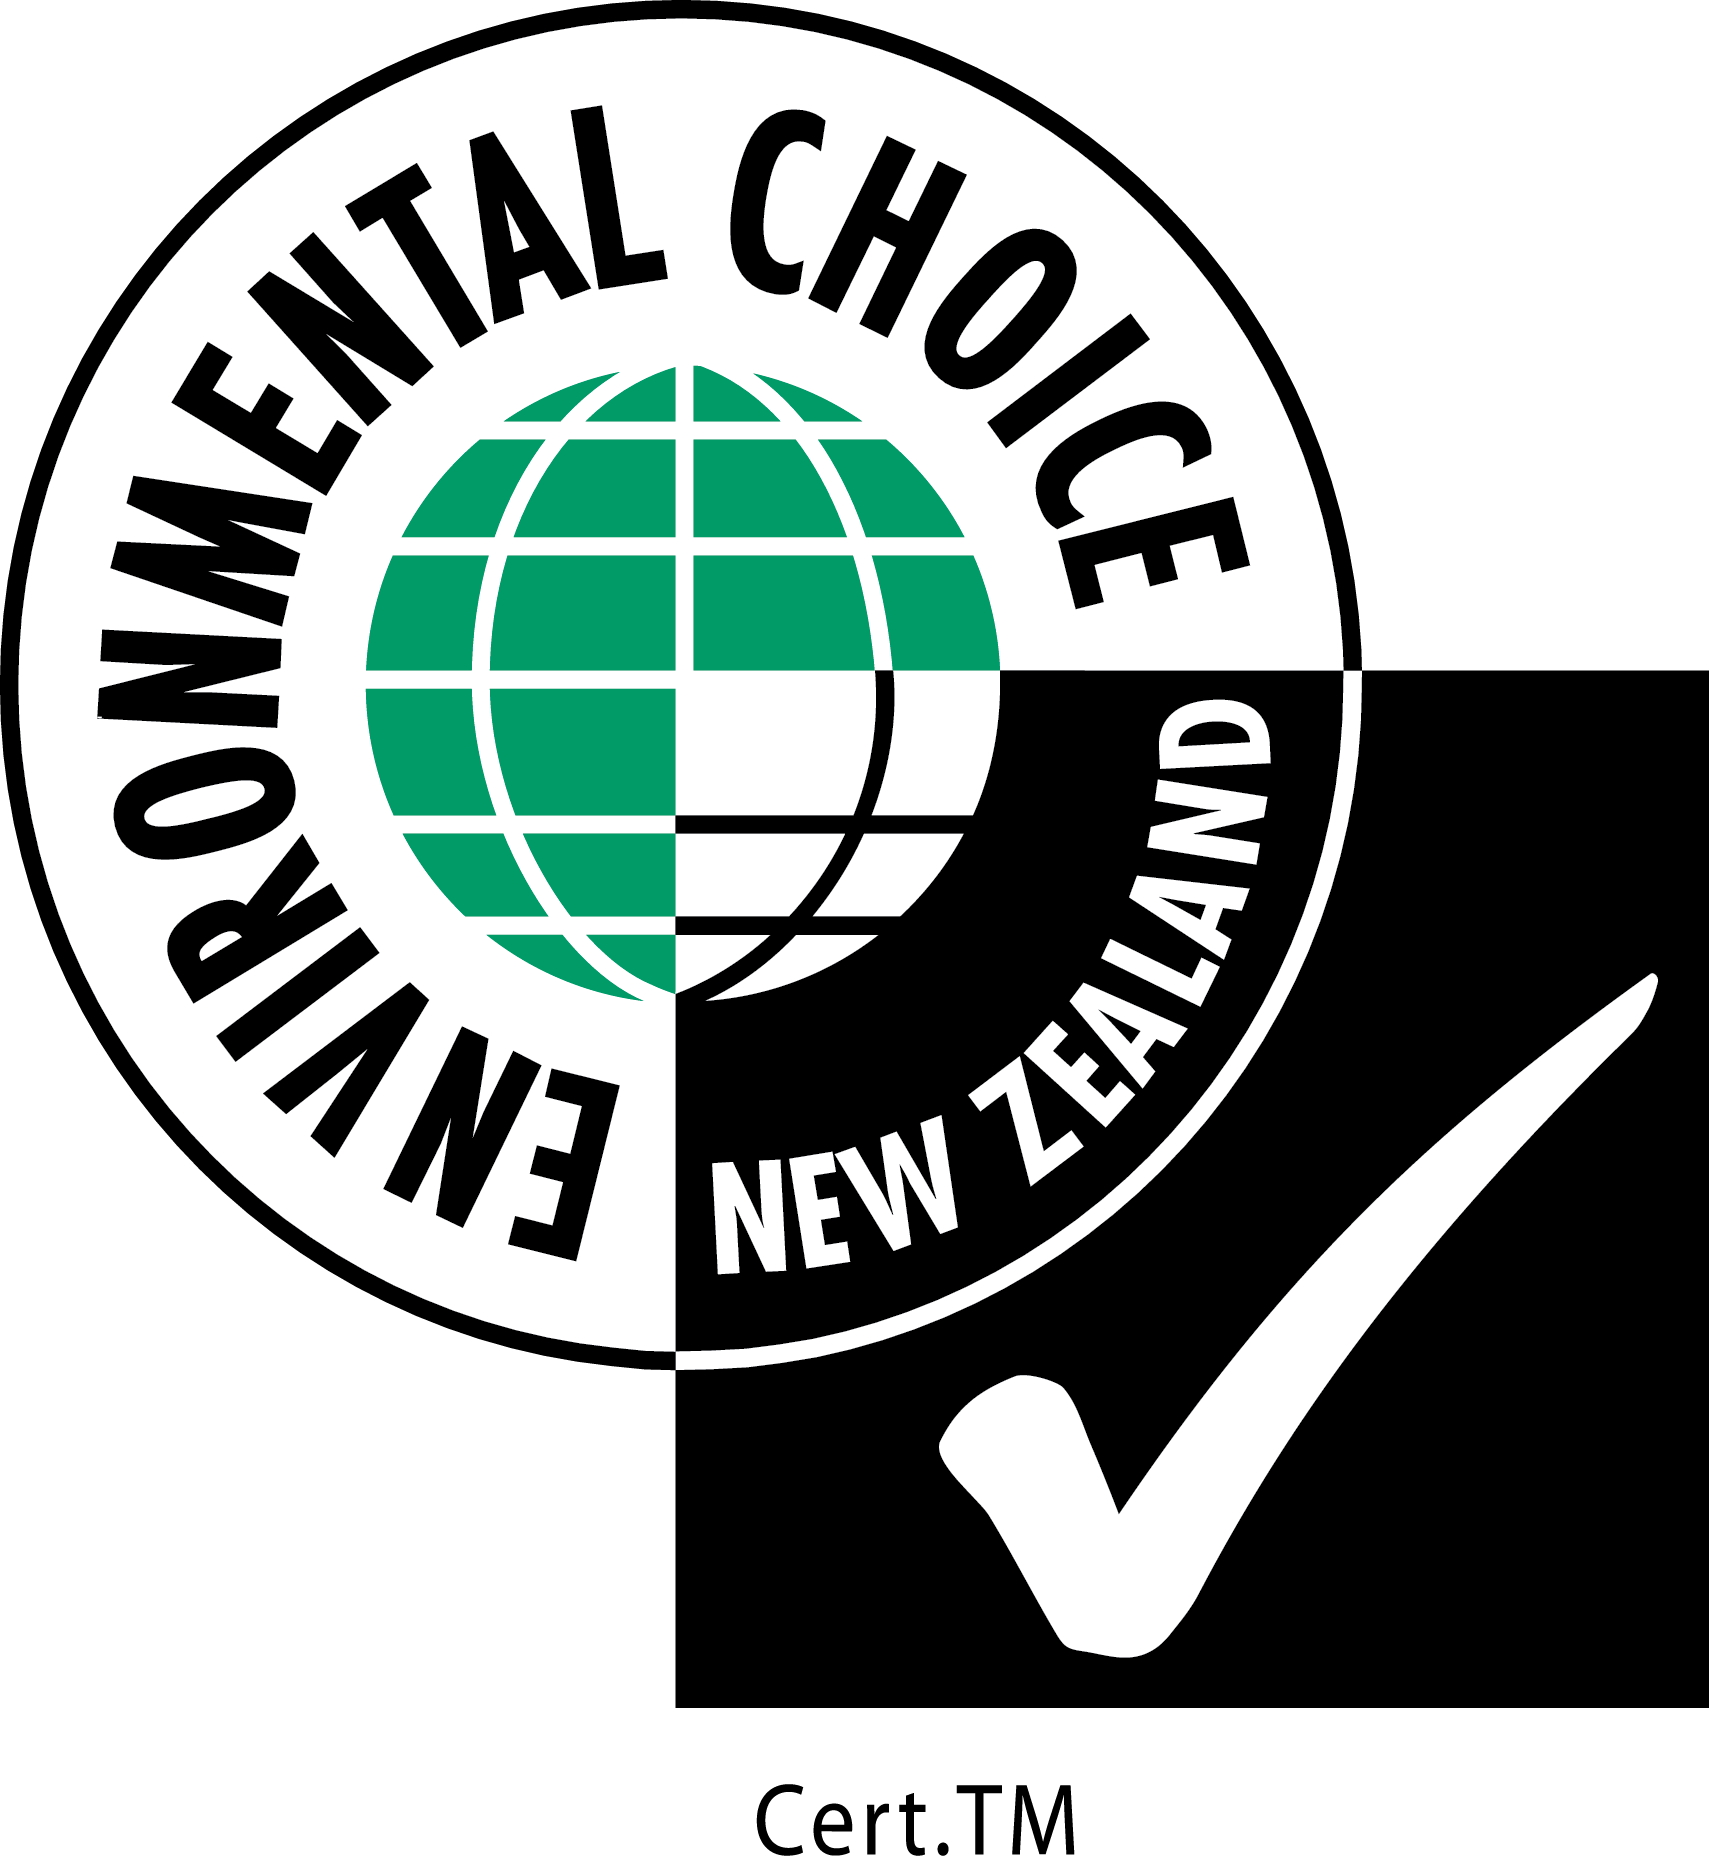 enviro choice logo2